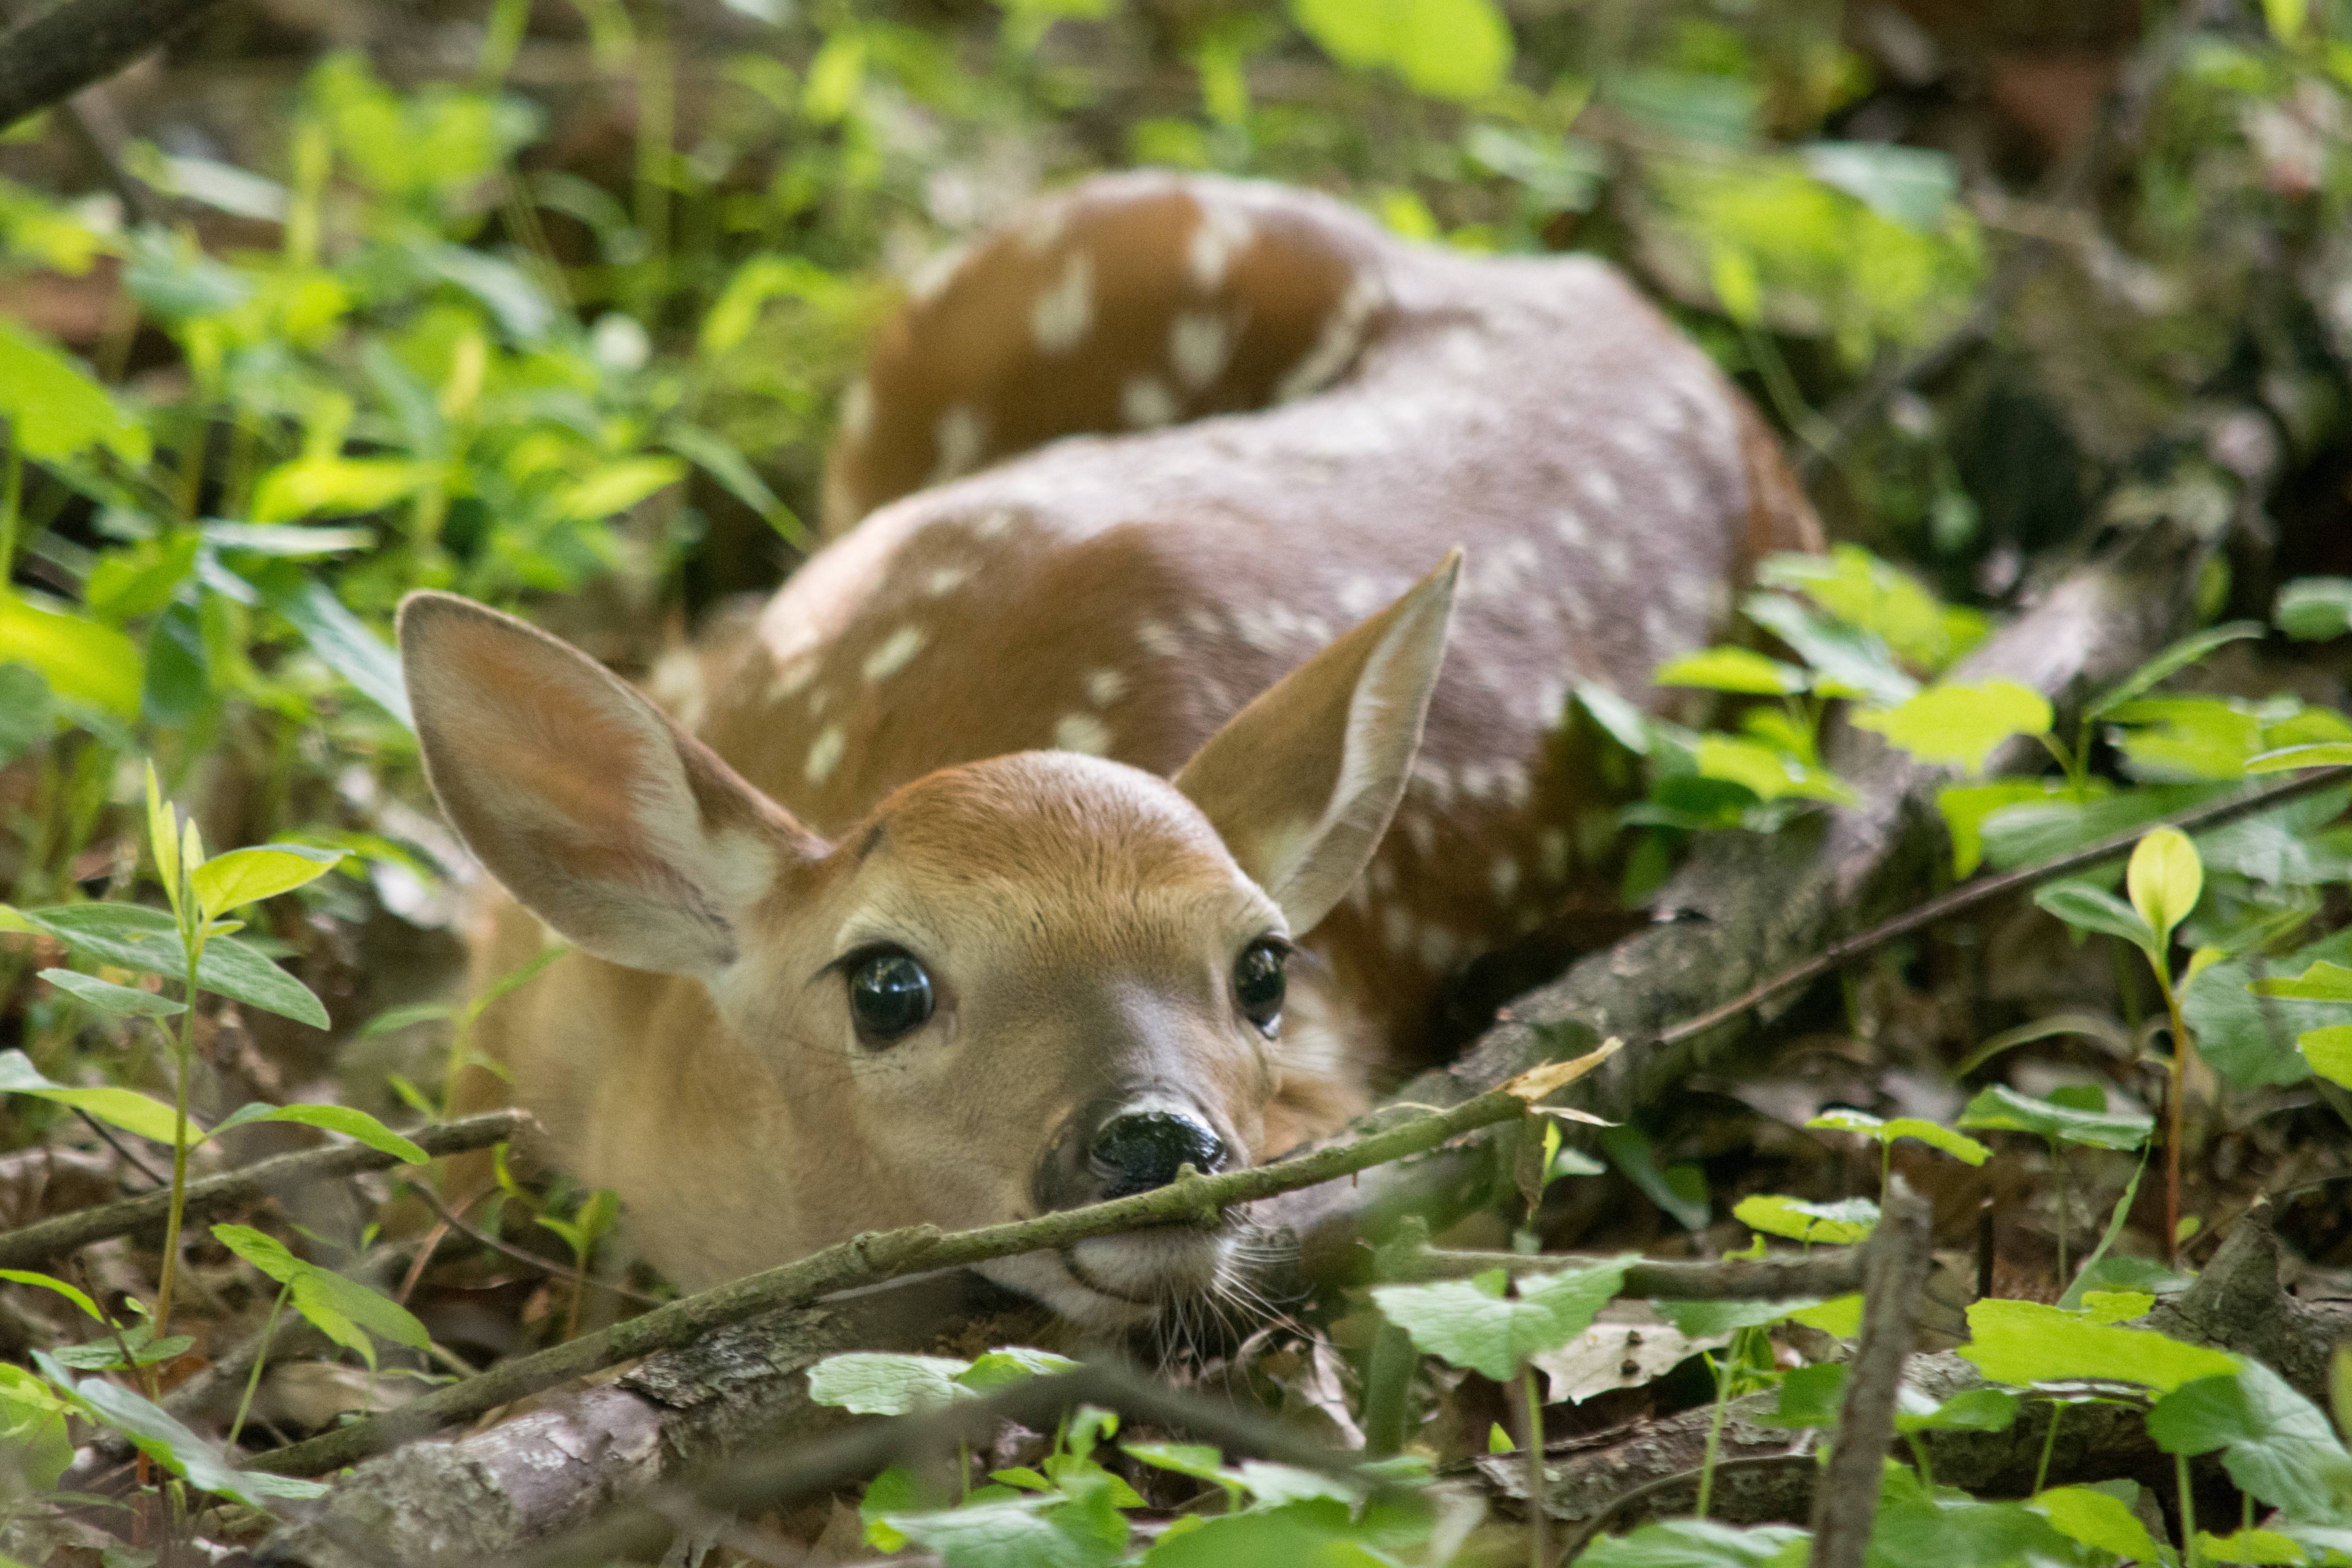 Baby deer hiding out in my yard this weekend : aww